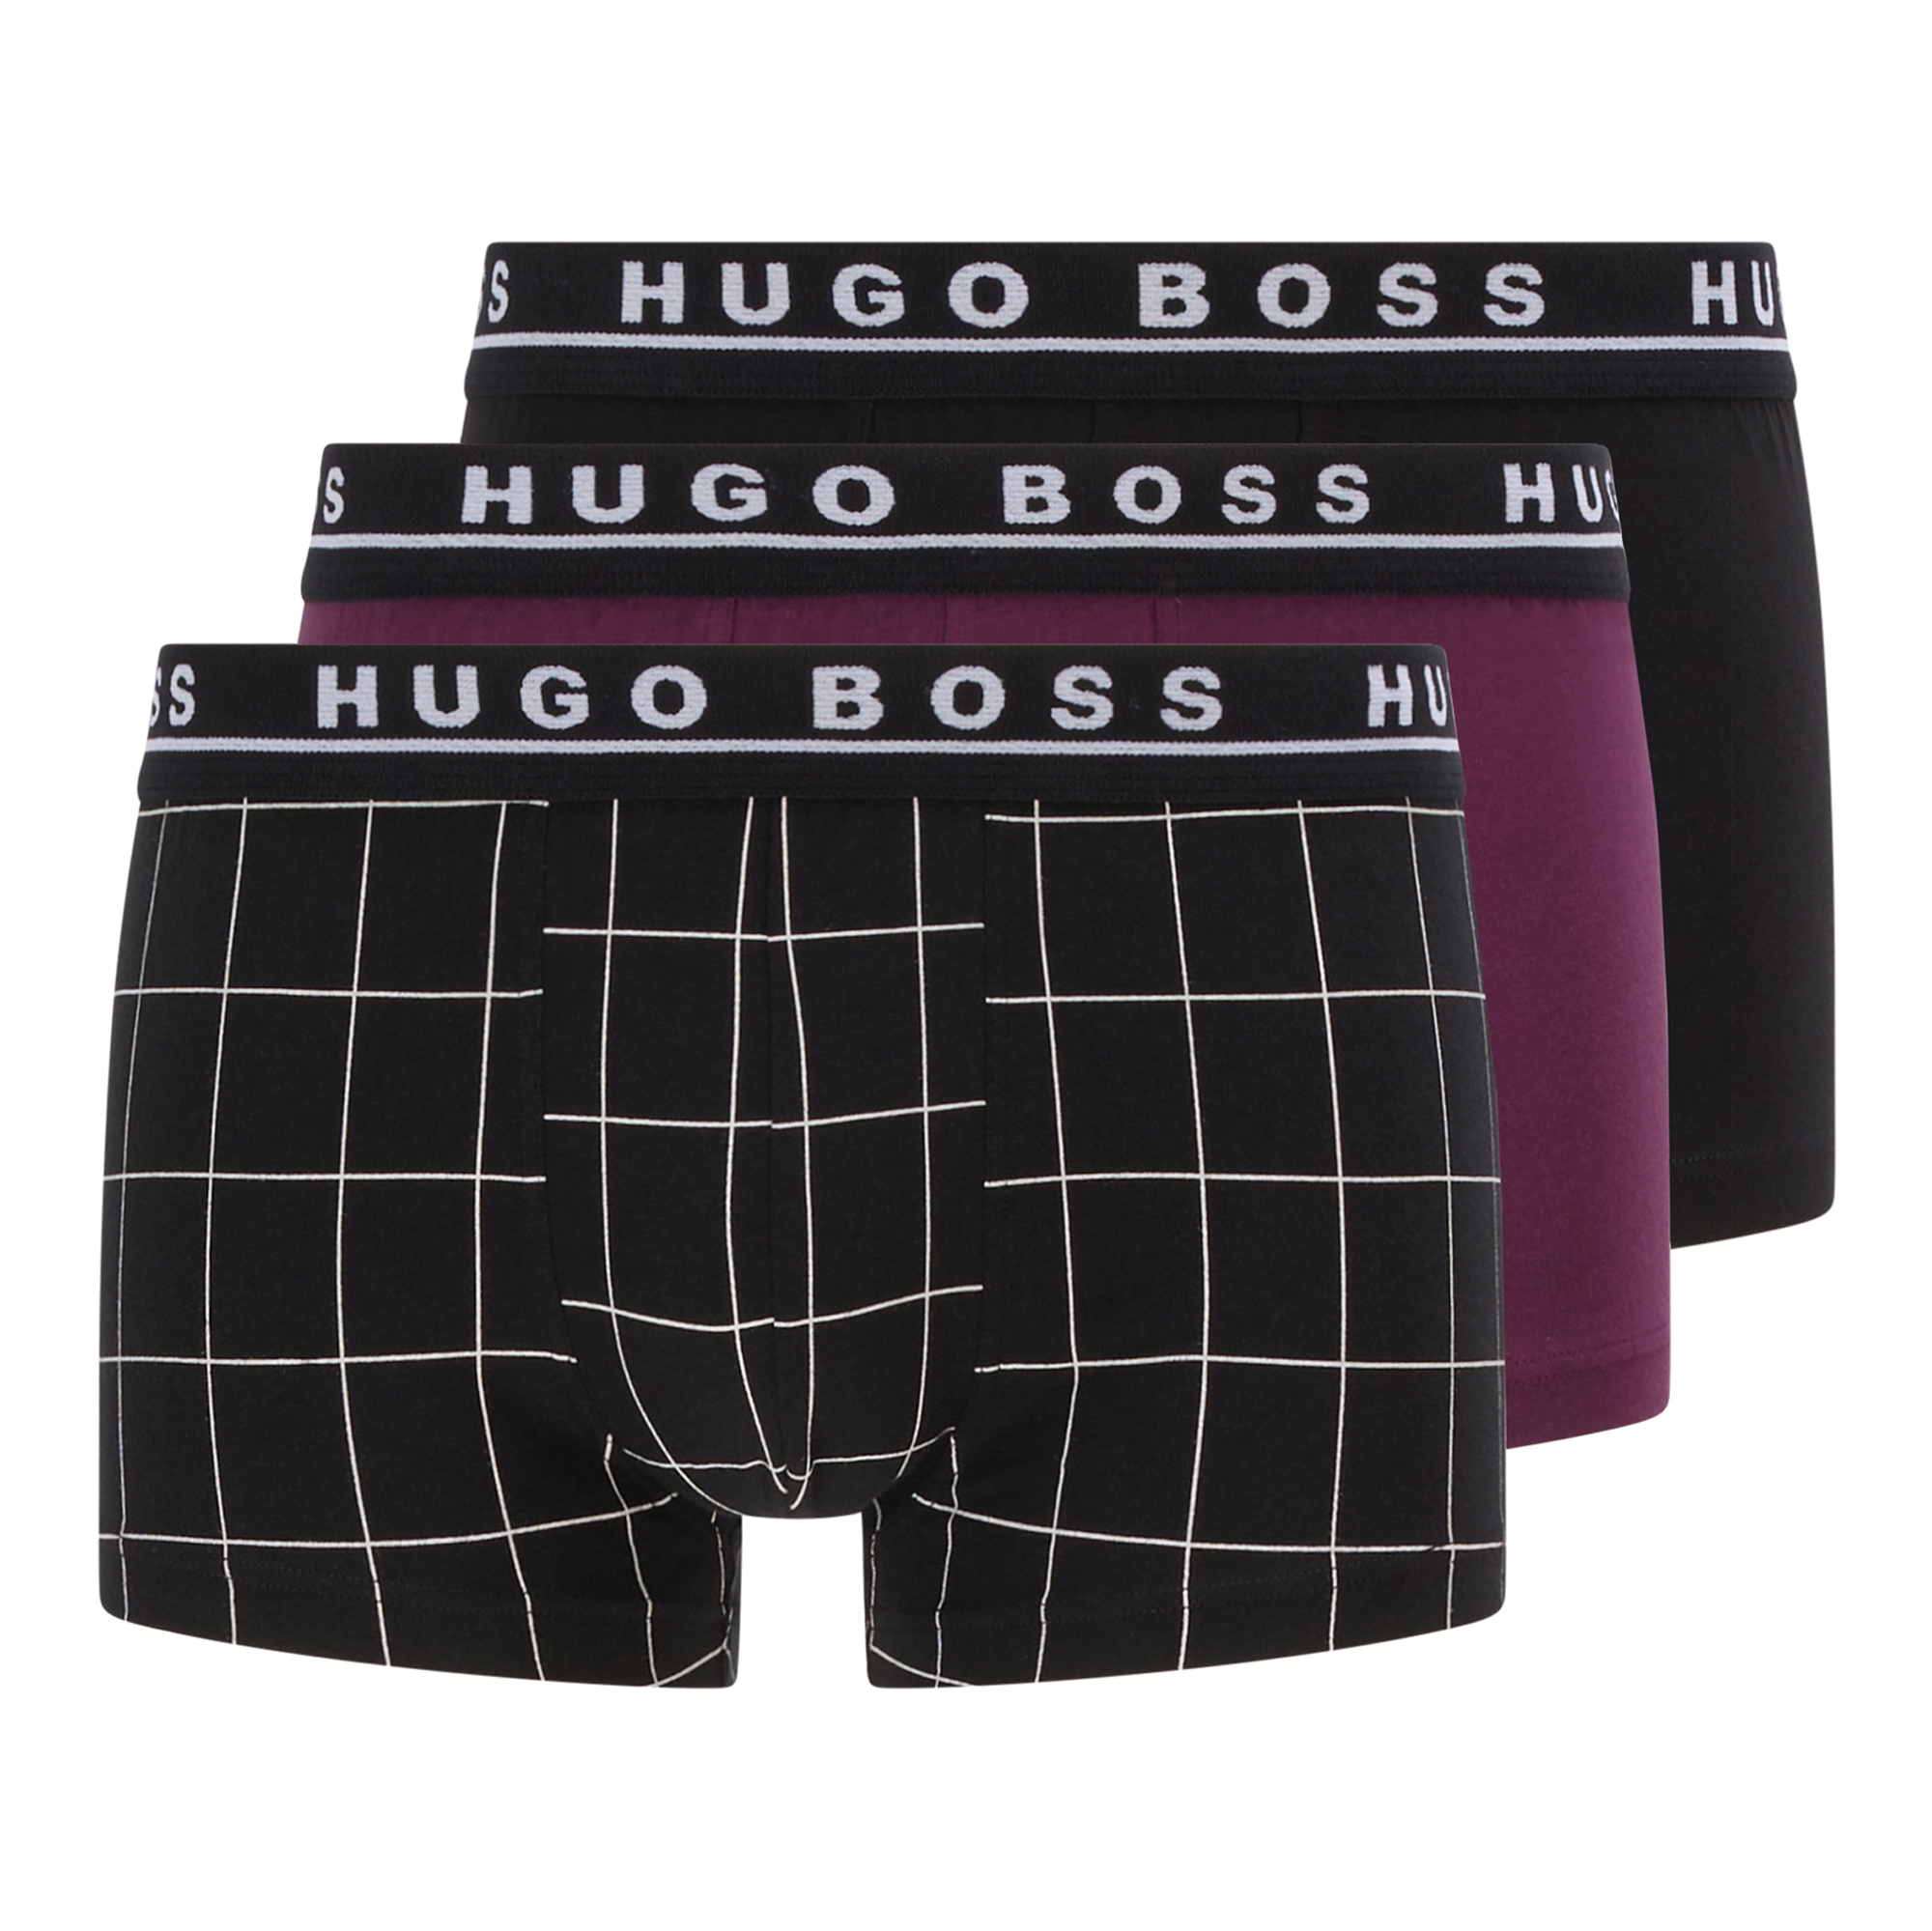 Boxers Hugo Boss Trunk Homme (lot de 3)